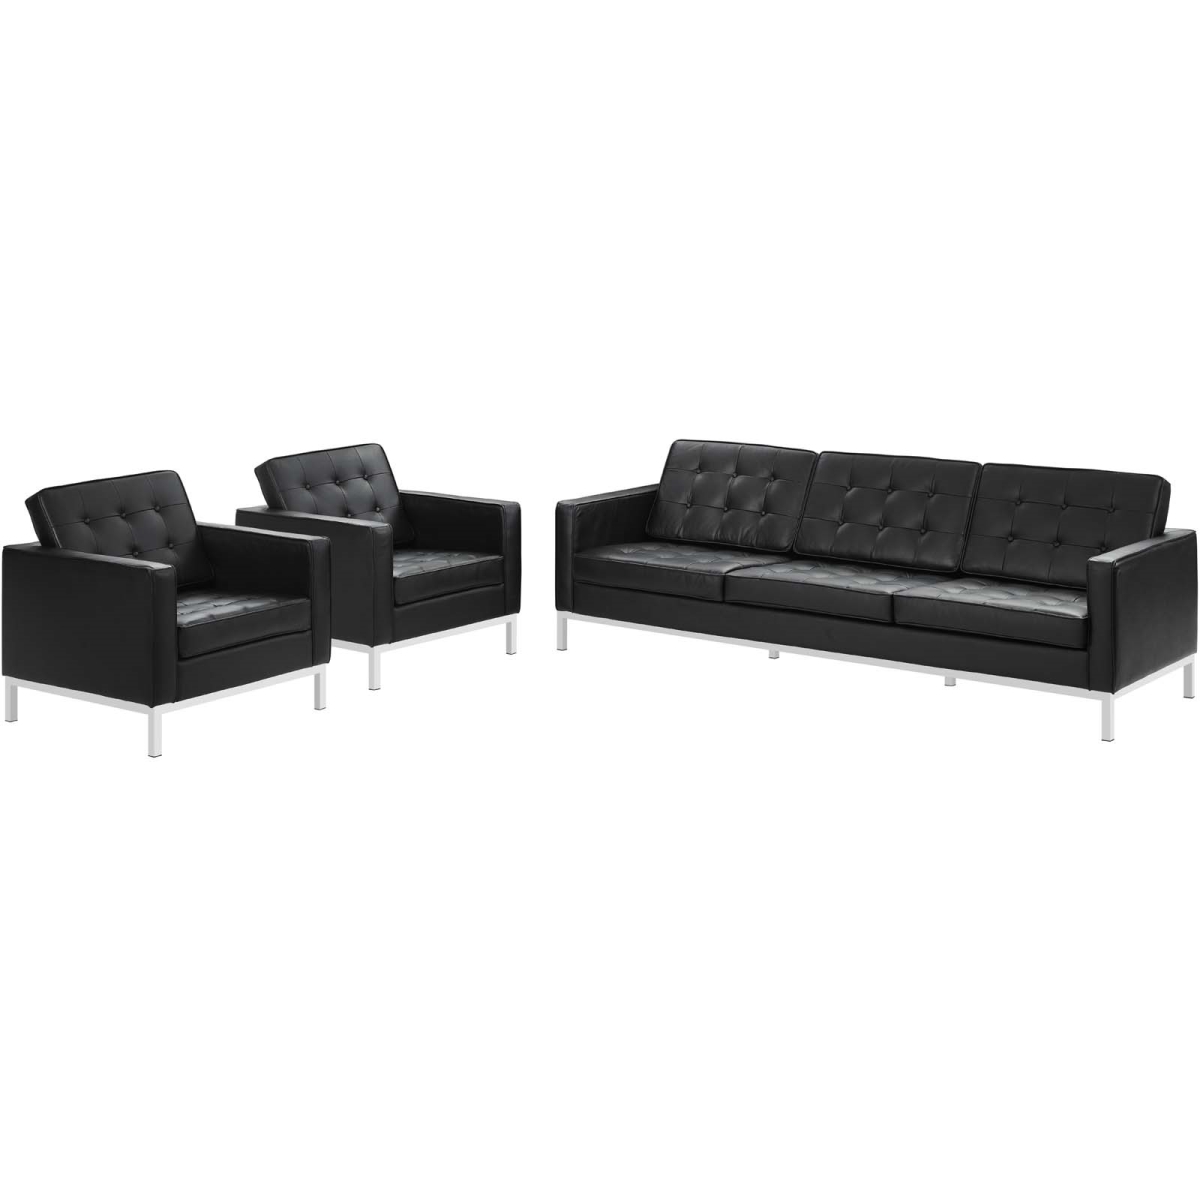 Eei-3102-blk-set Loft Leather Sofa & Armchair Set - Black, 3 Piece - 30.5 X 121.5 X 30.5 In.